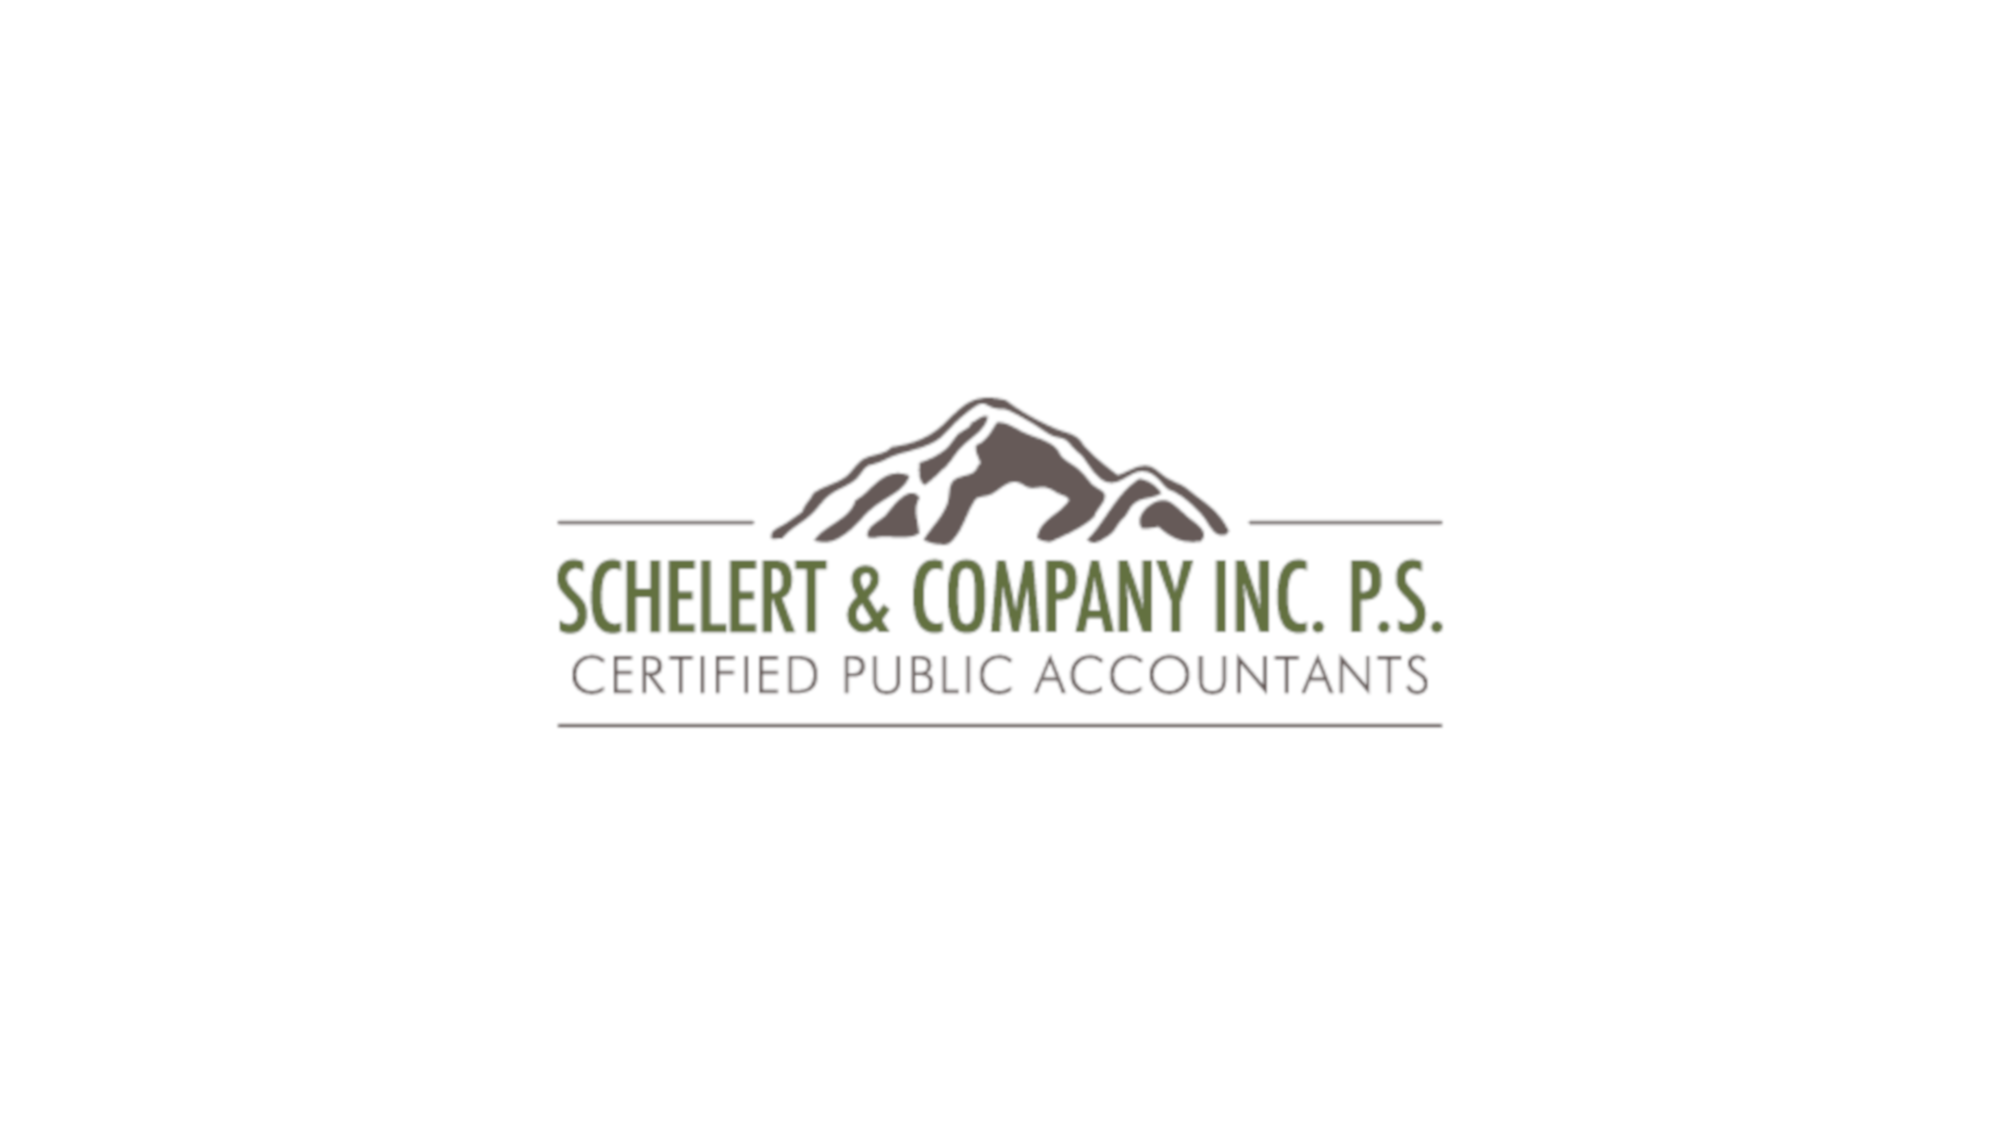 Schelert & Company Inc